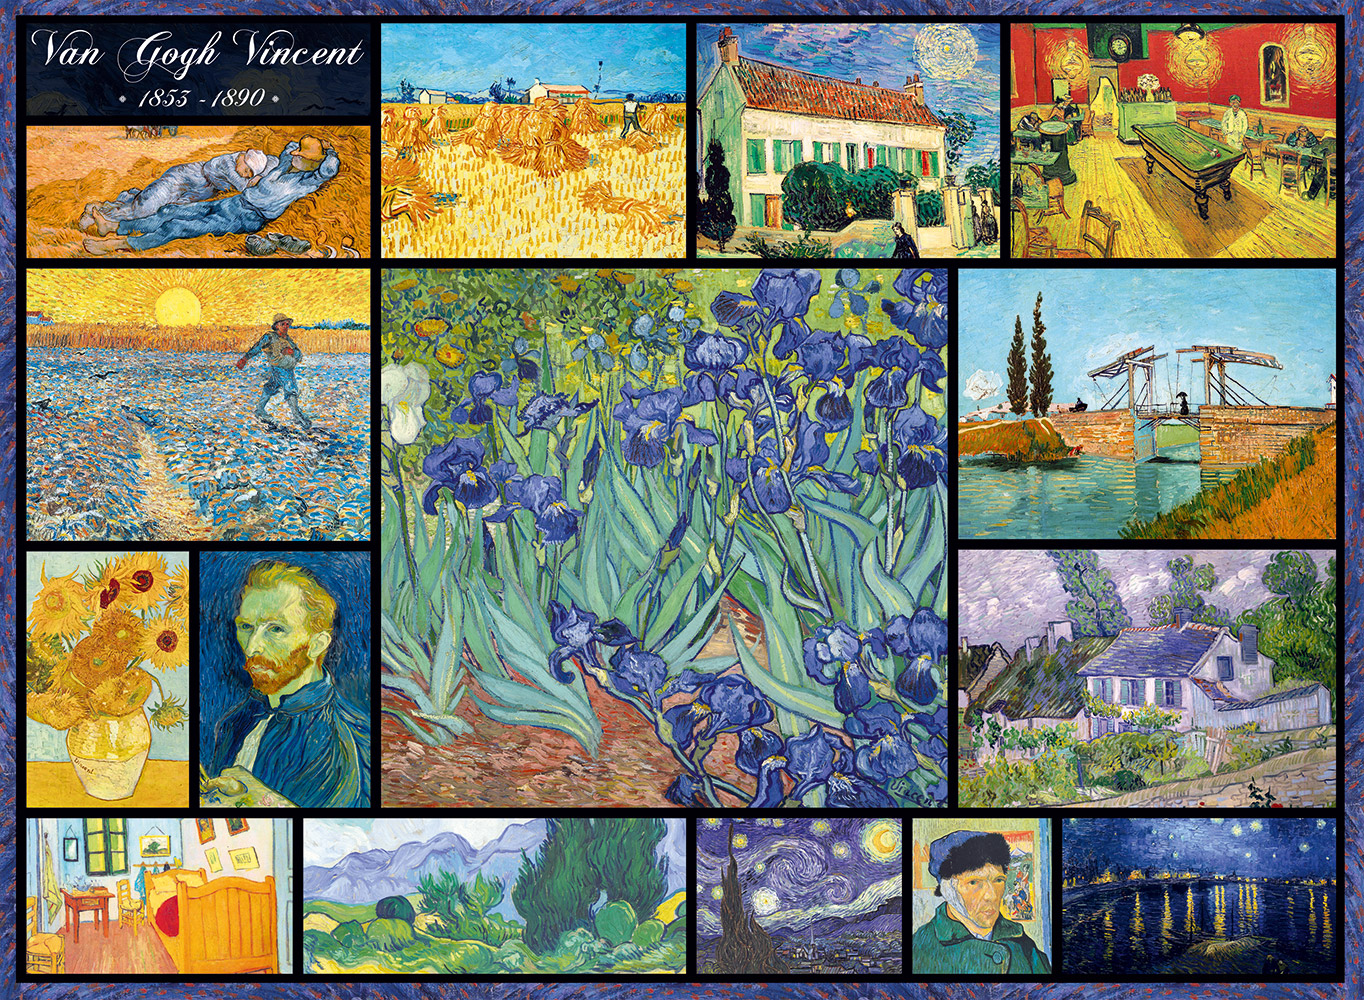 Bluebird Puzzle Collage - Vincent Van Gogh 4000 Teile Puzzle Art-by-Bluebird-60154